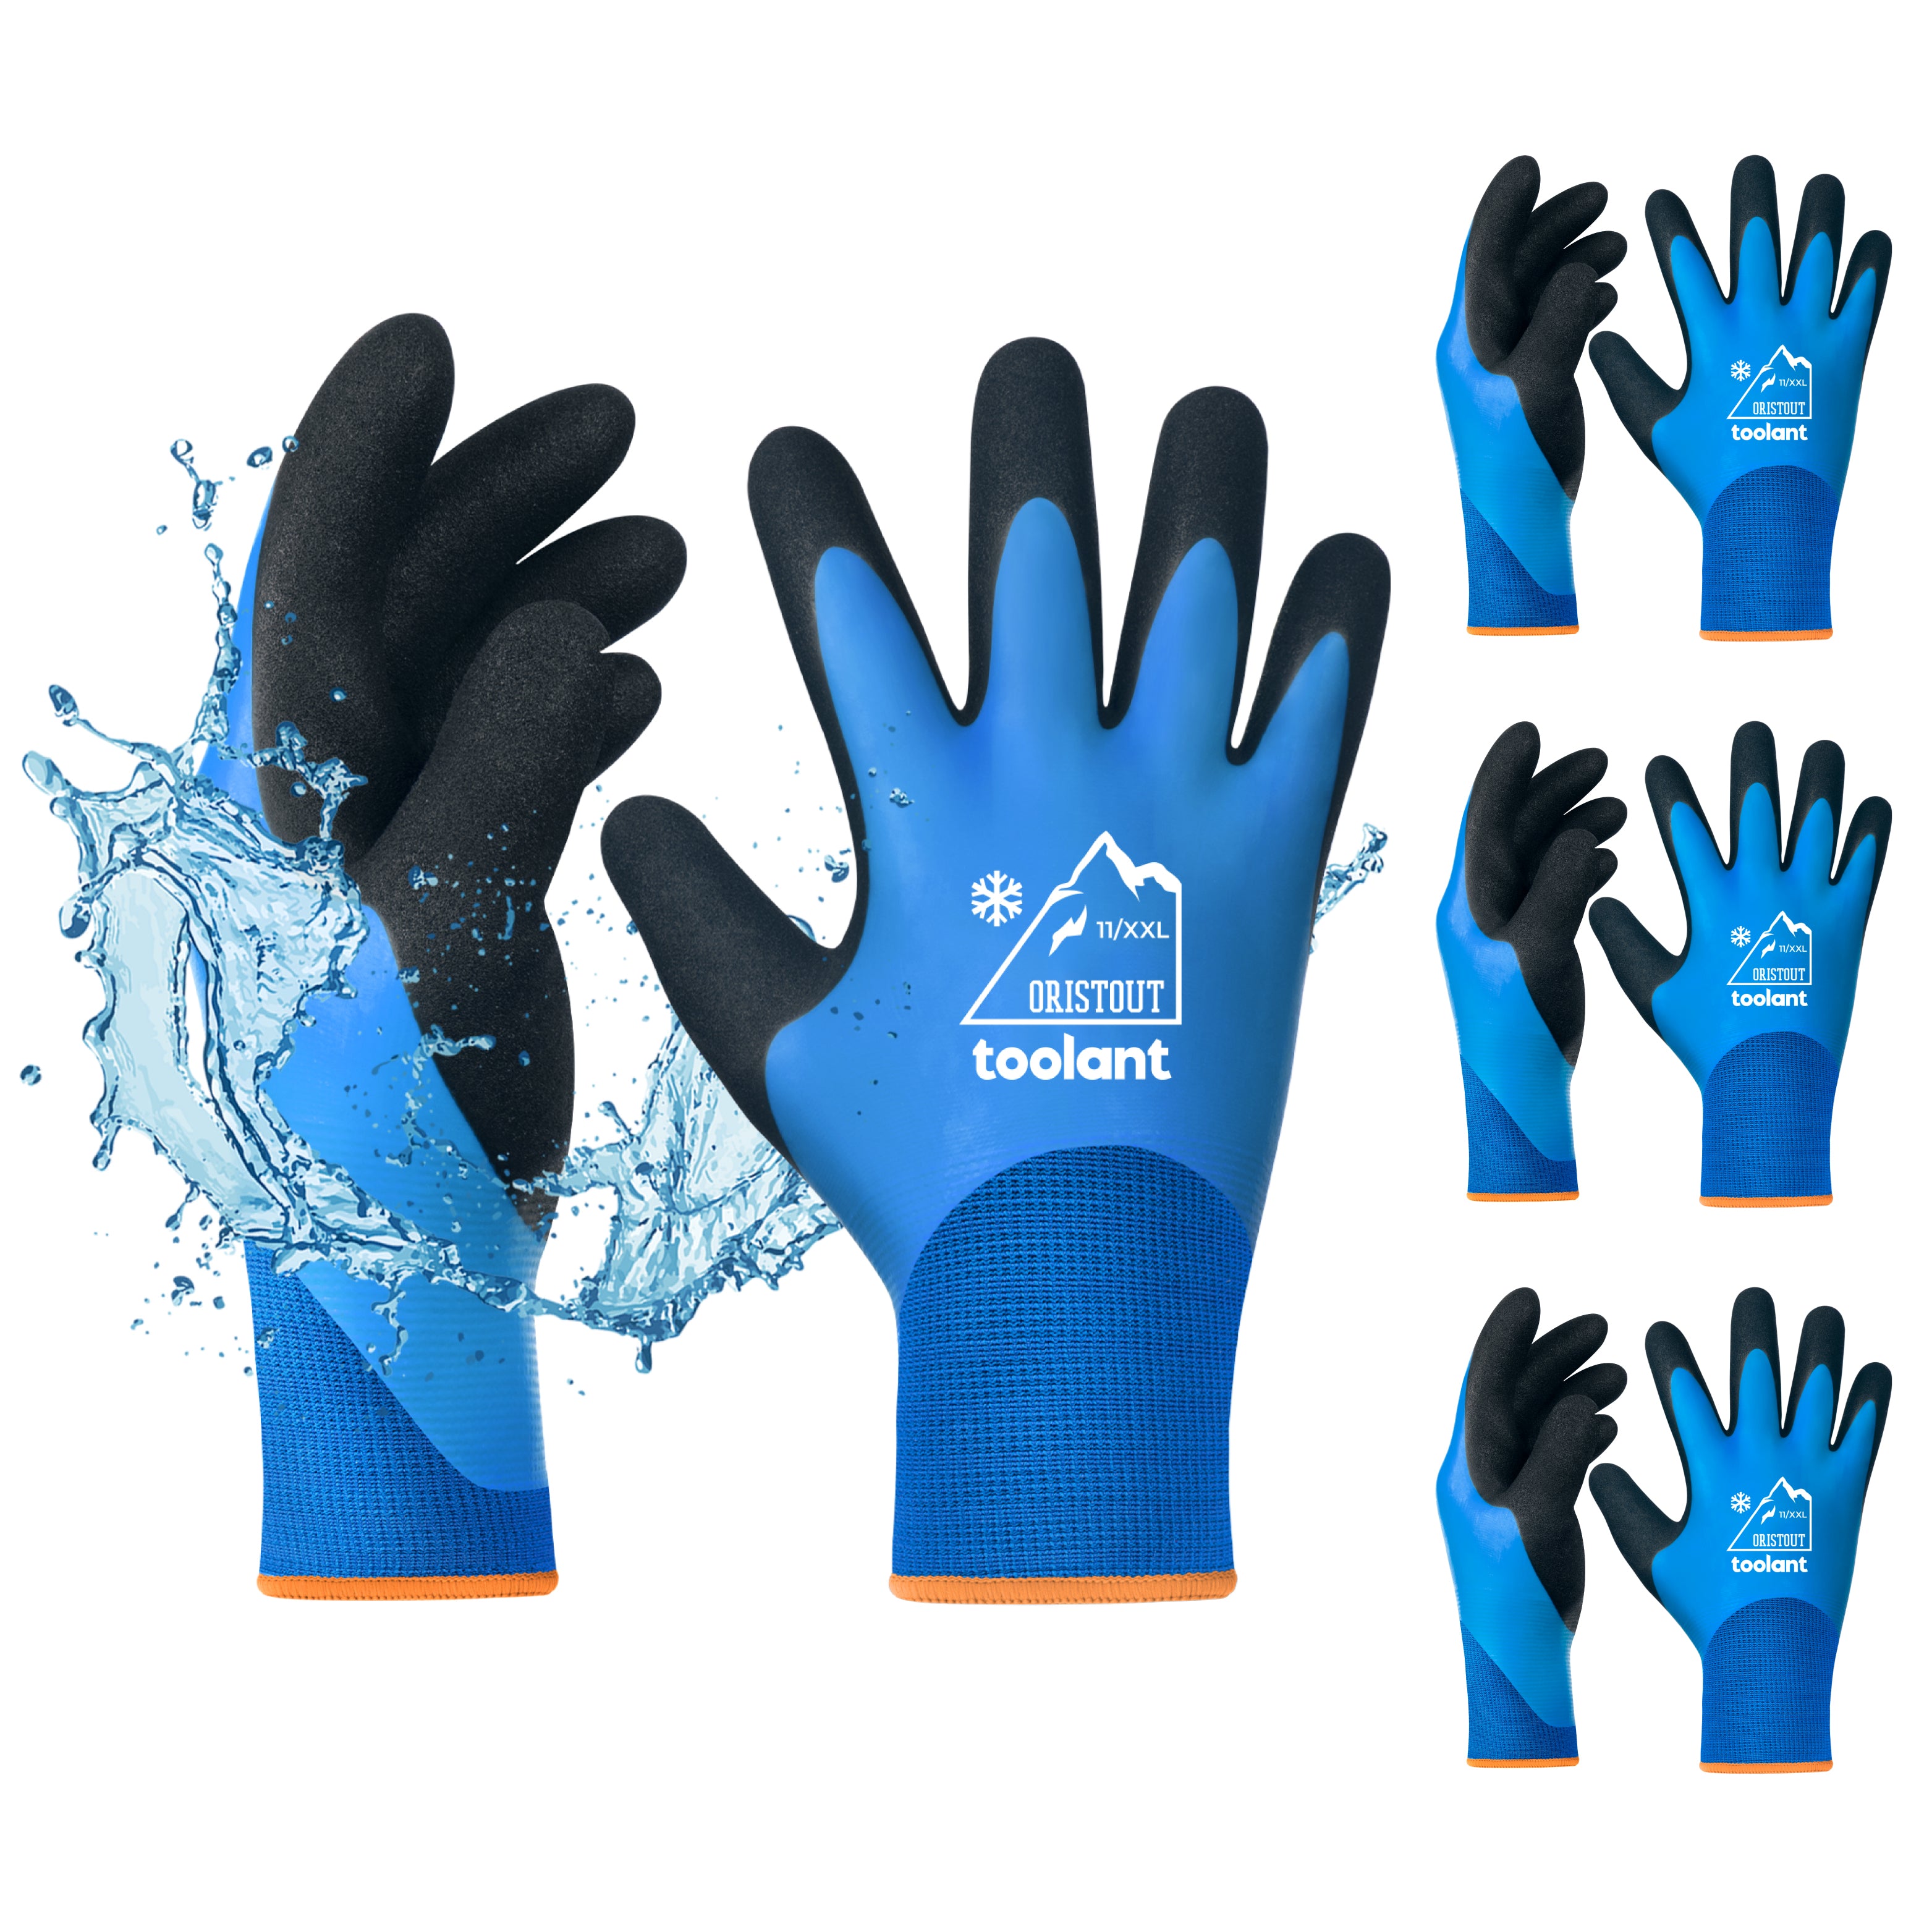 OriStout Waterproof Winter Work Gloves for Men and Women, Freezer Gloves for Working in Freezer, Thermal Insulated Fishing Gloves, Super, Metal